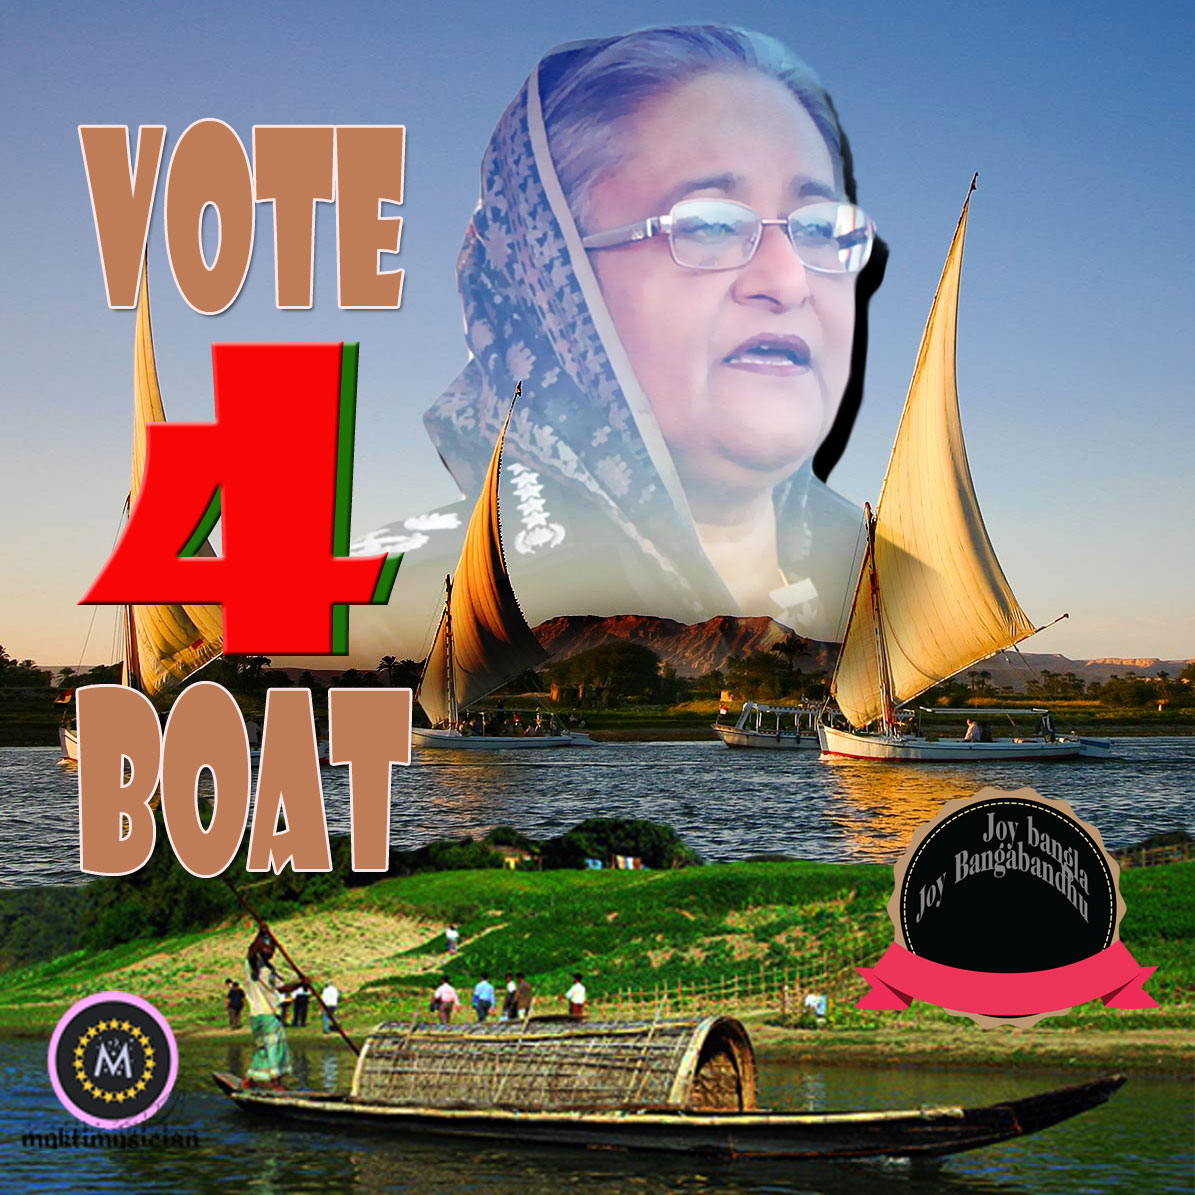 vote for boat